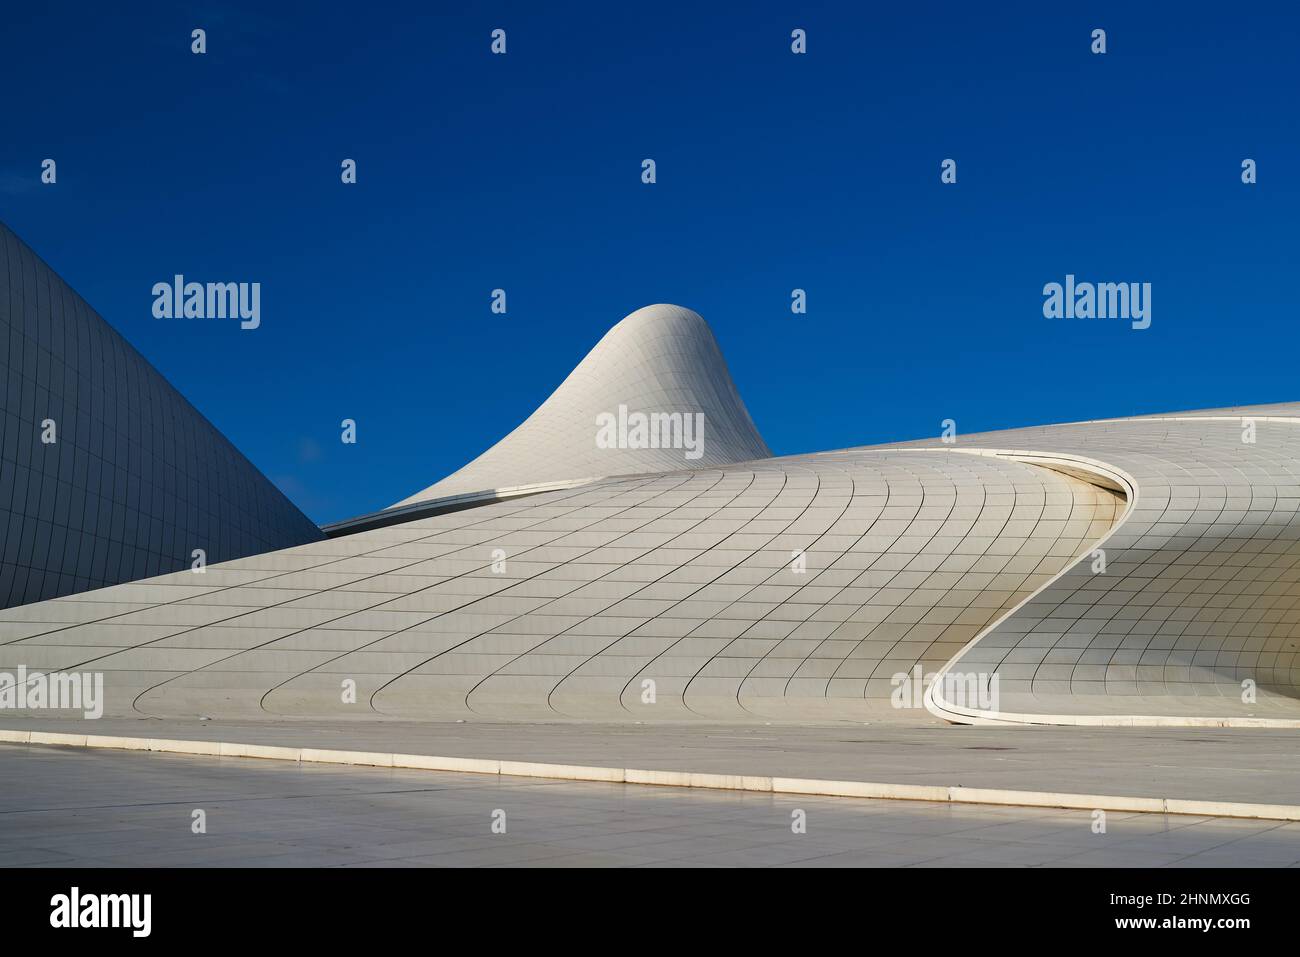 Abstract design of the Heydar Aliyev Center Stock Photo